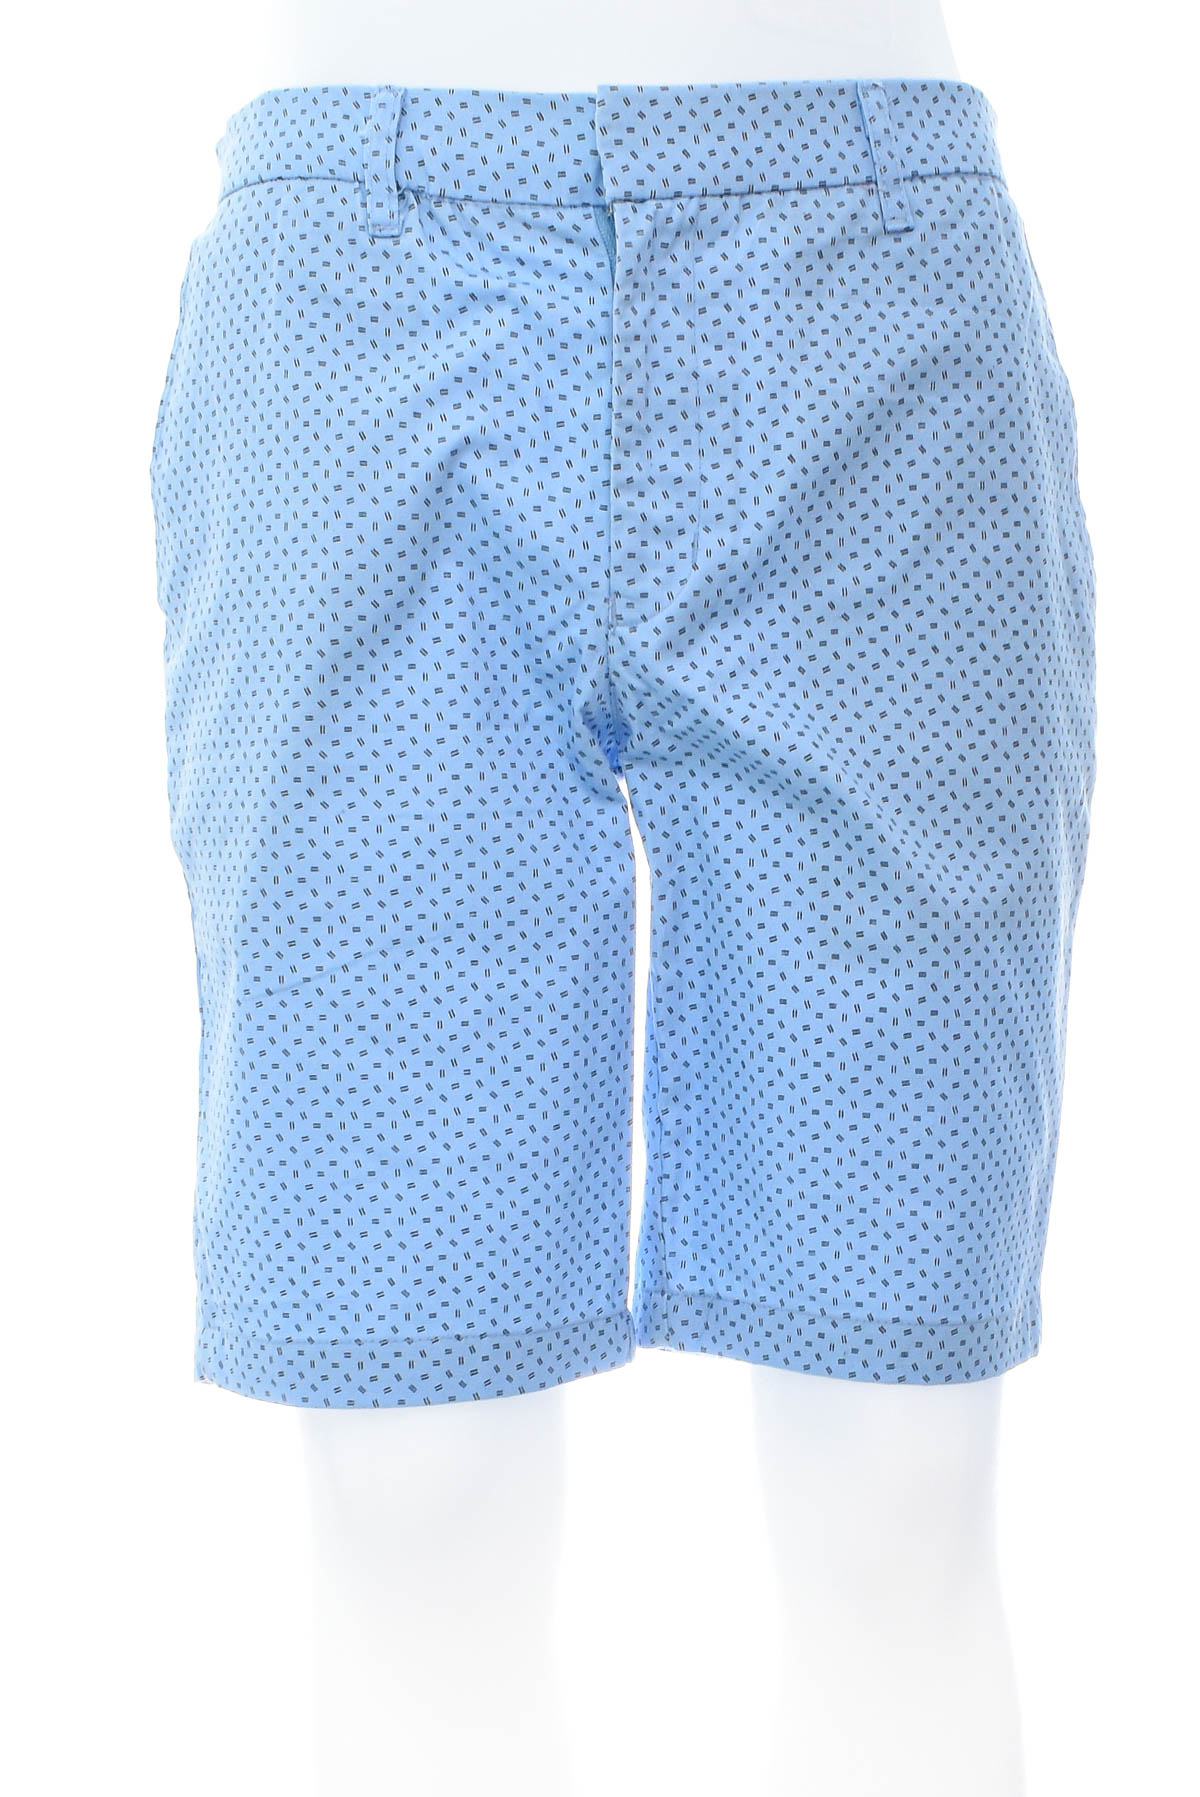 Men's shorts - OR oakrige - 0